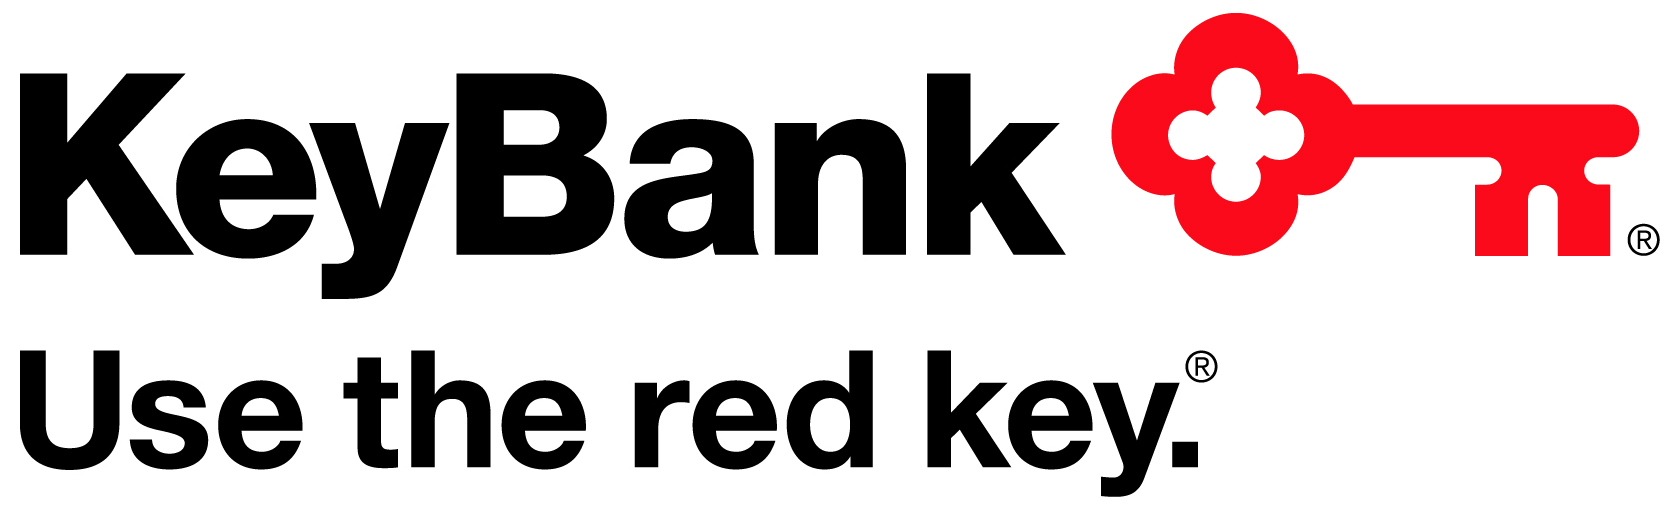 KeyBank-logo-Use_tagline-CMYK.jpg